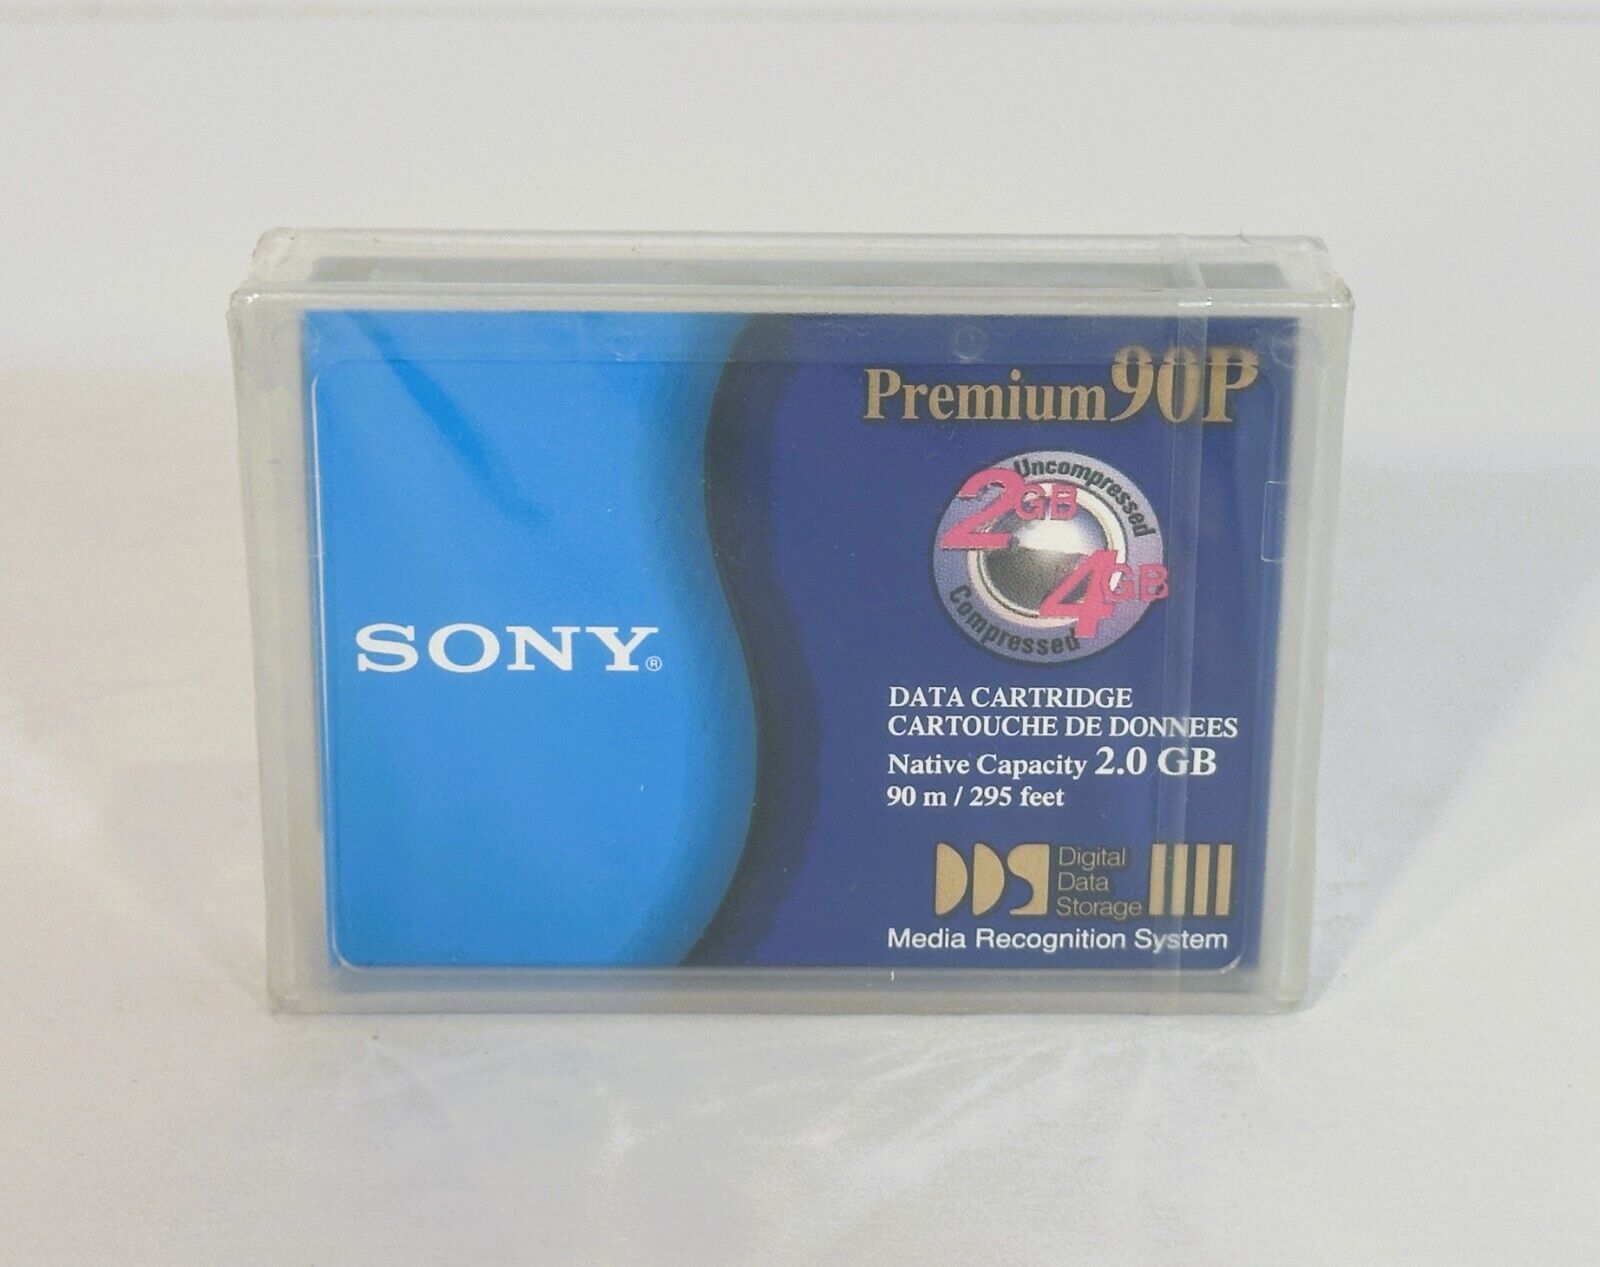 Sony Premium 90P Data Cartridge 2.0 GB - New/Factory Sealed